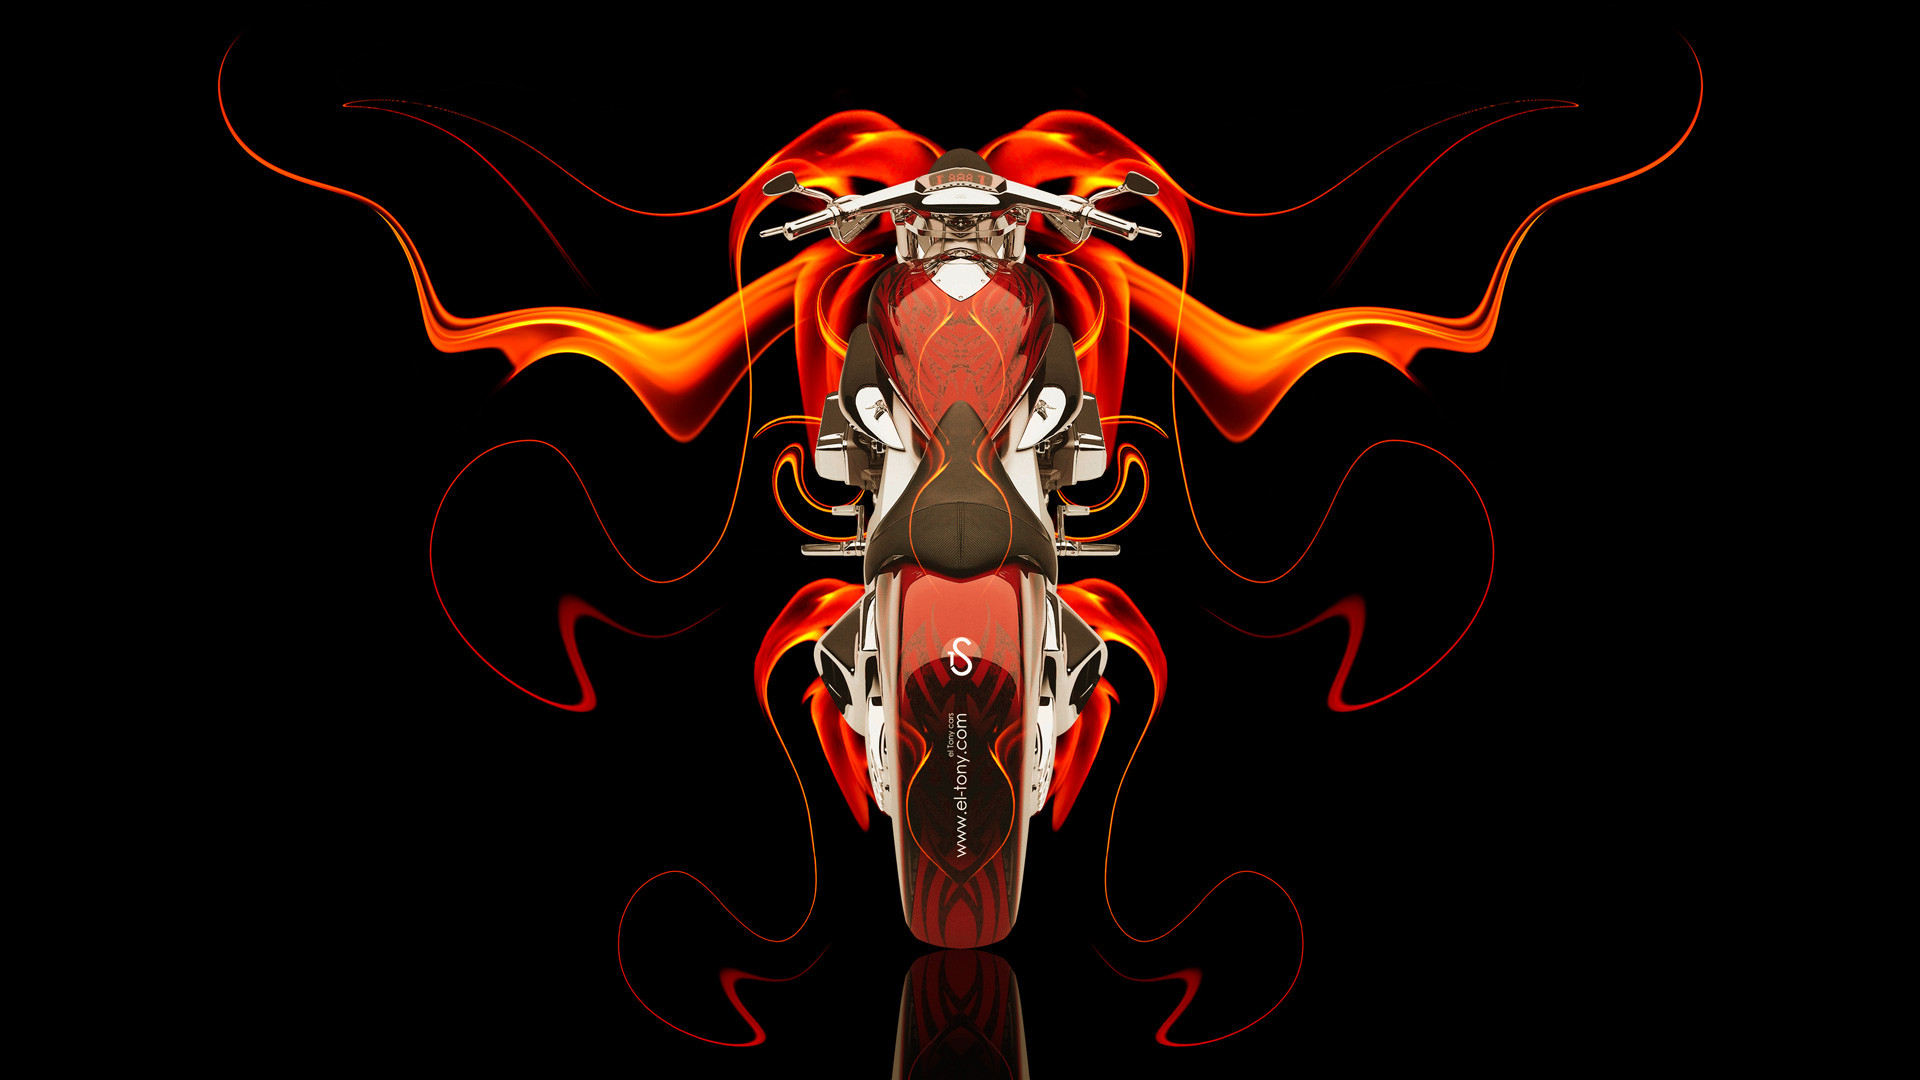 1920x1080 Moto-BackUp-Fantasy-Fire-Bike-2014-HD-Wallpapers-